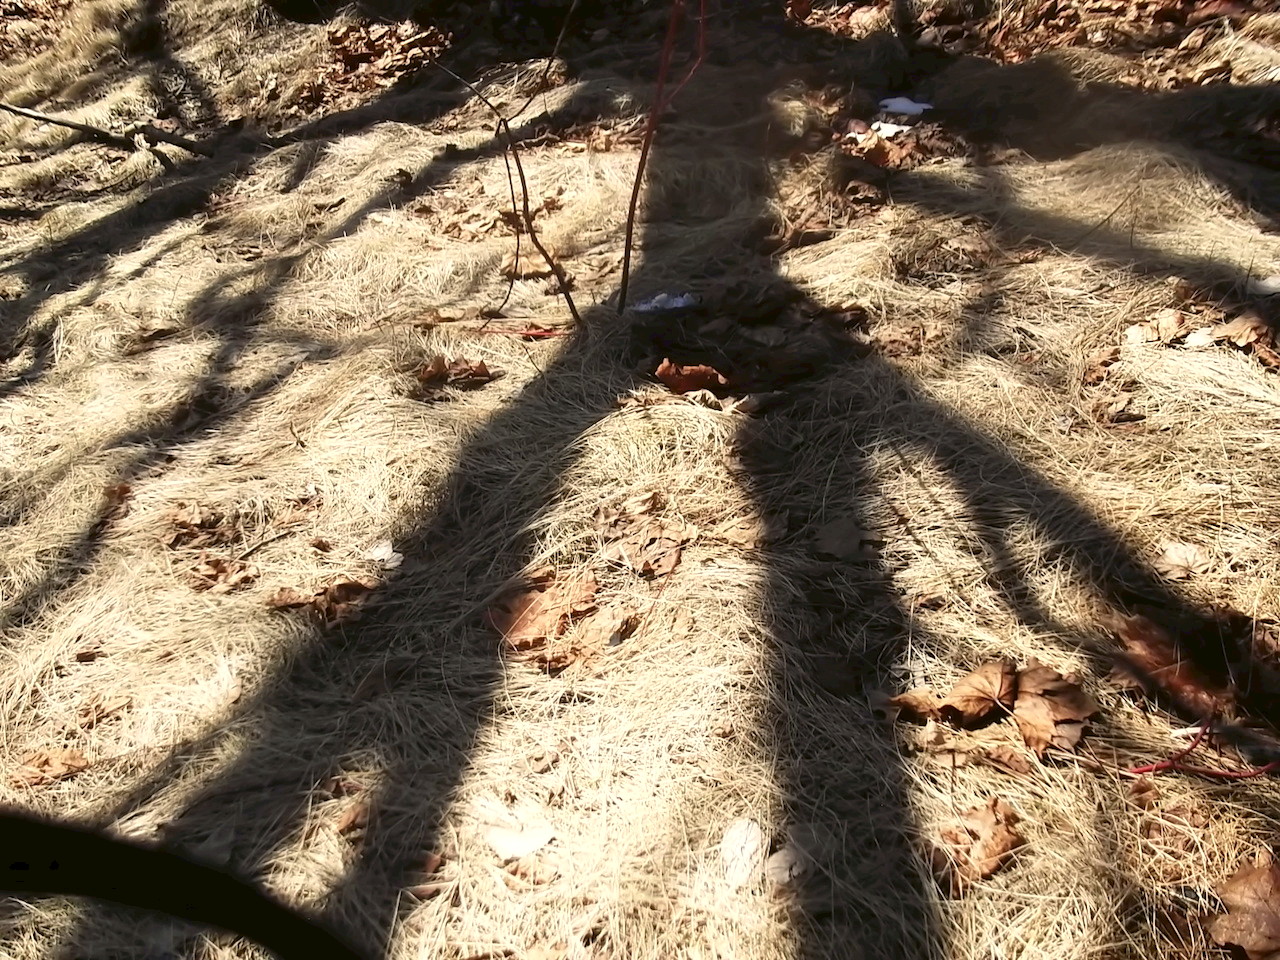 School-wide bondar challenge winner 2018-19 shadow of tree on ground